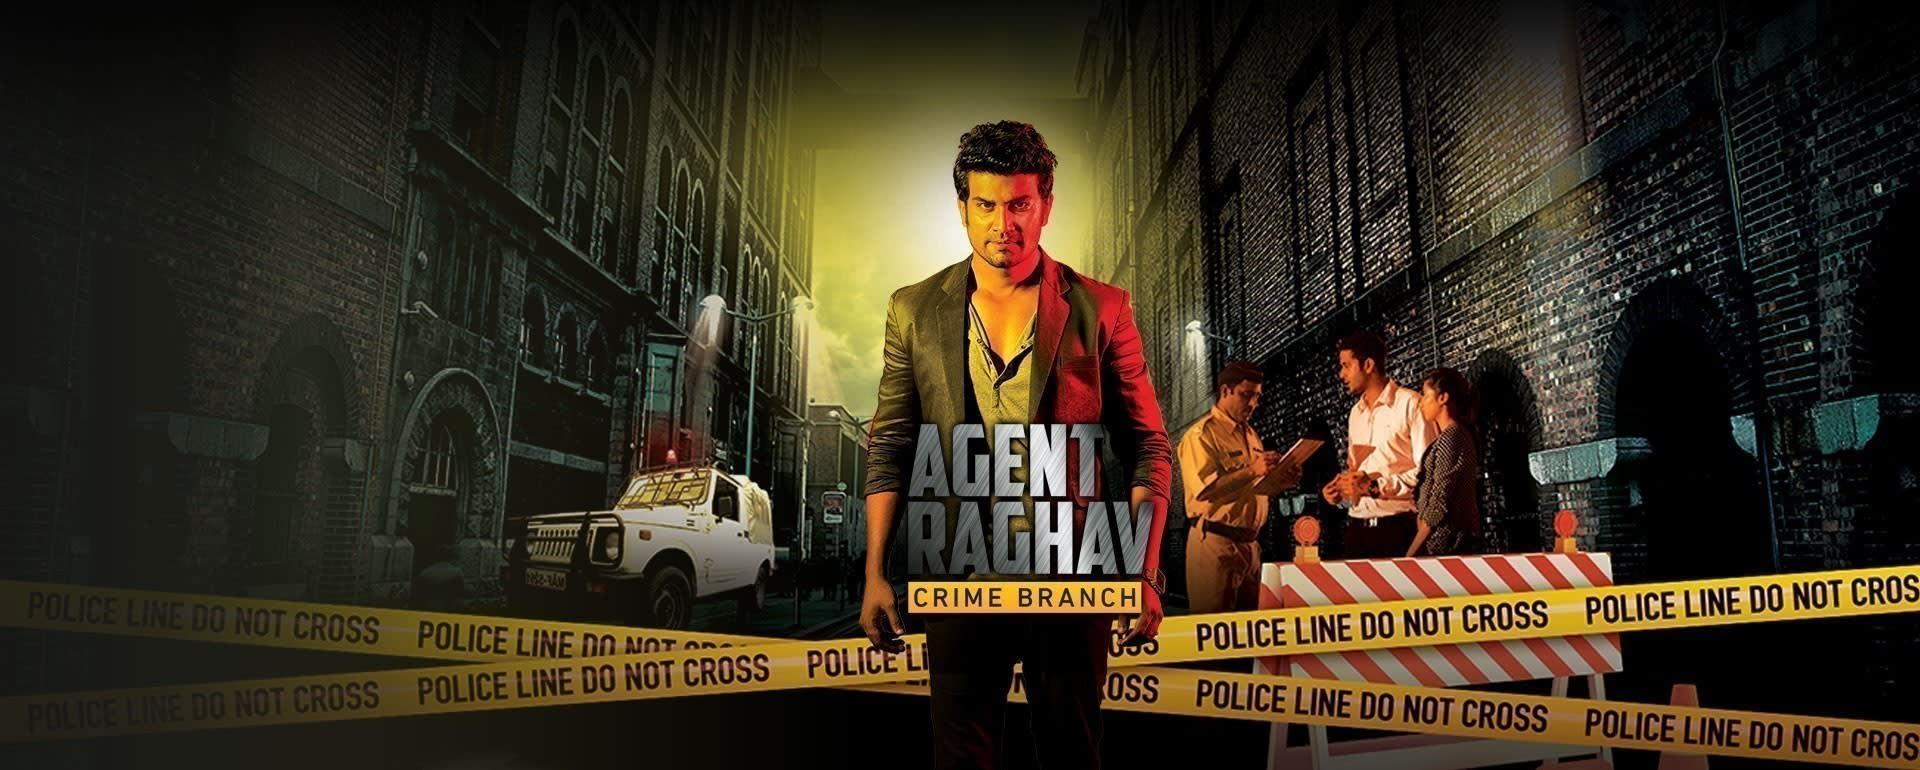 Agent Raghav - Crime Branch | Quick Recap